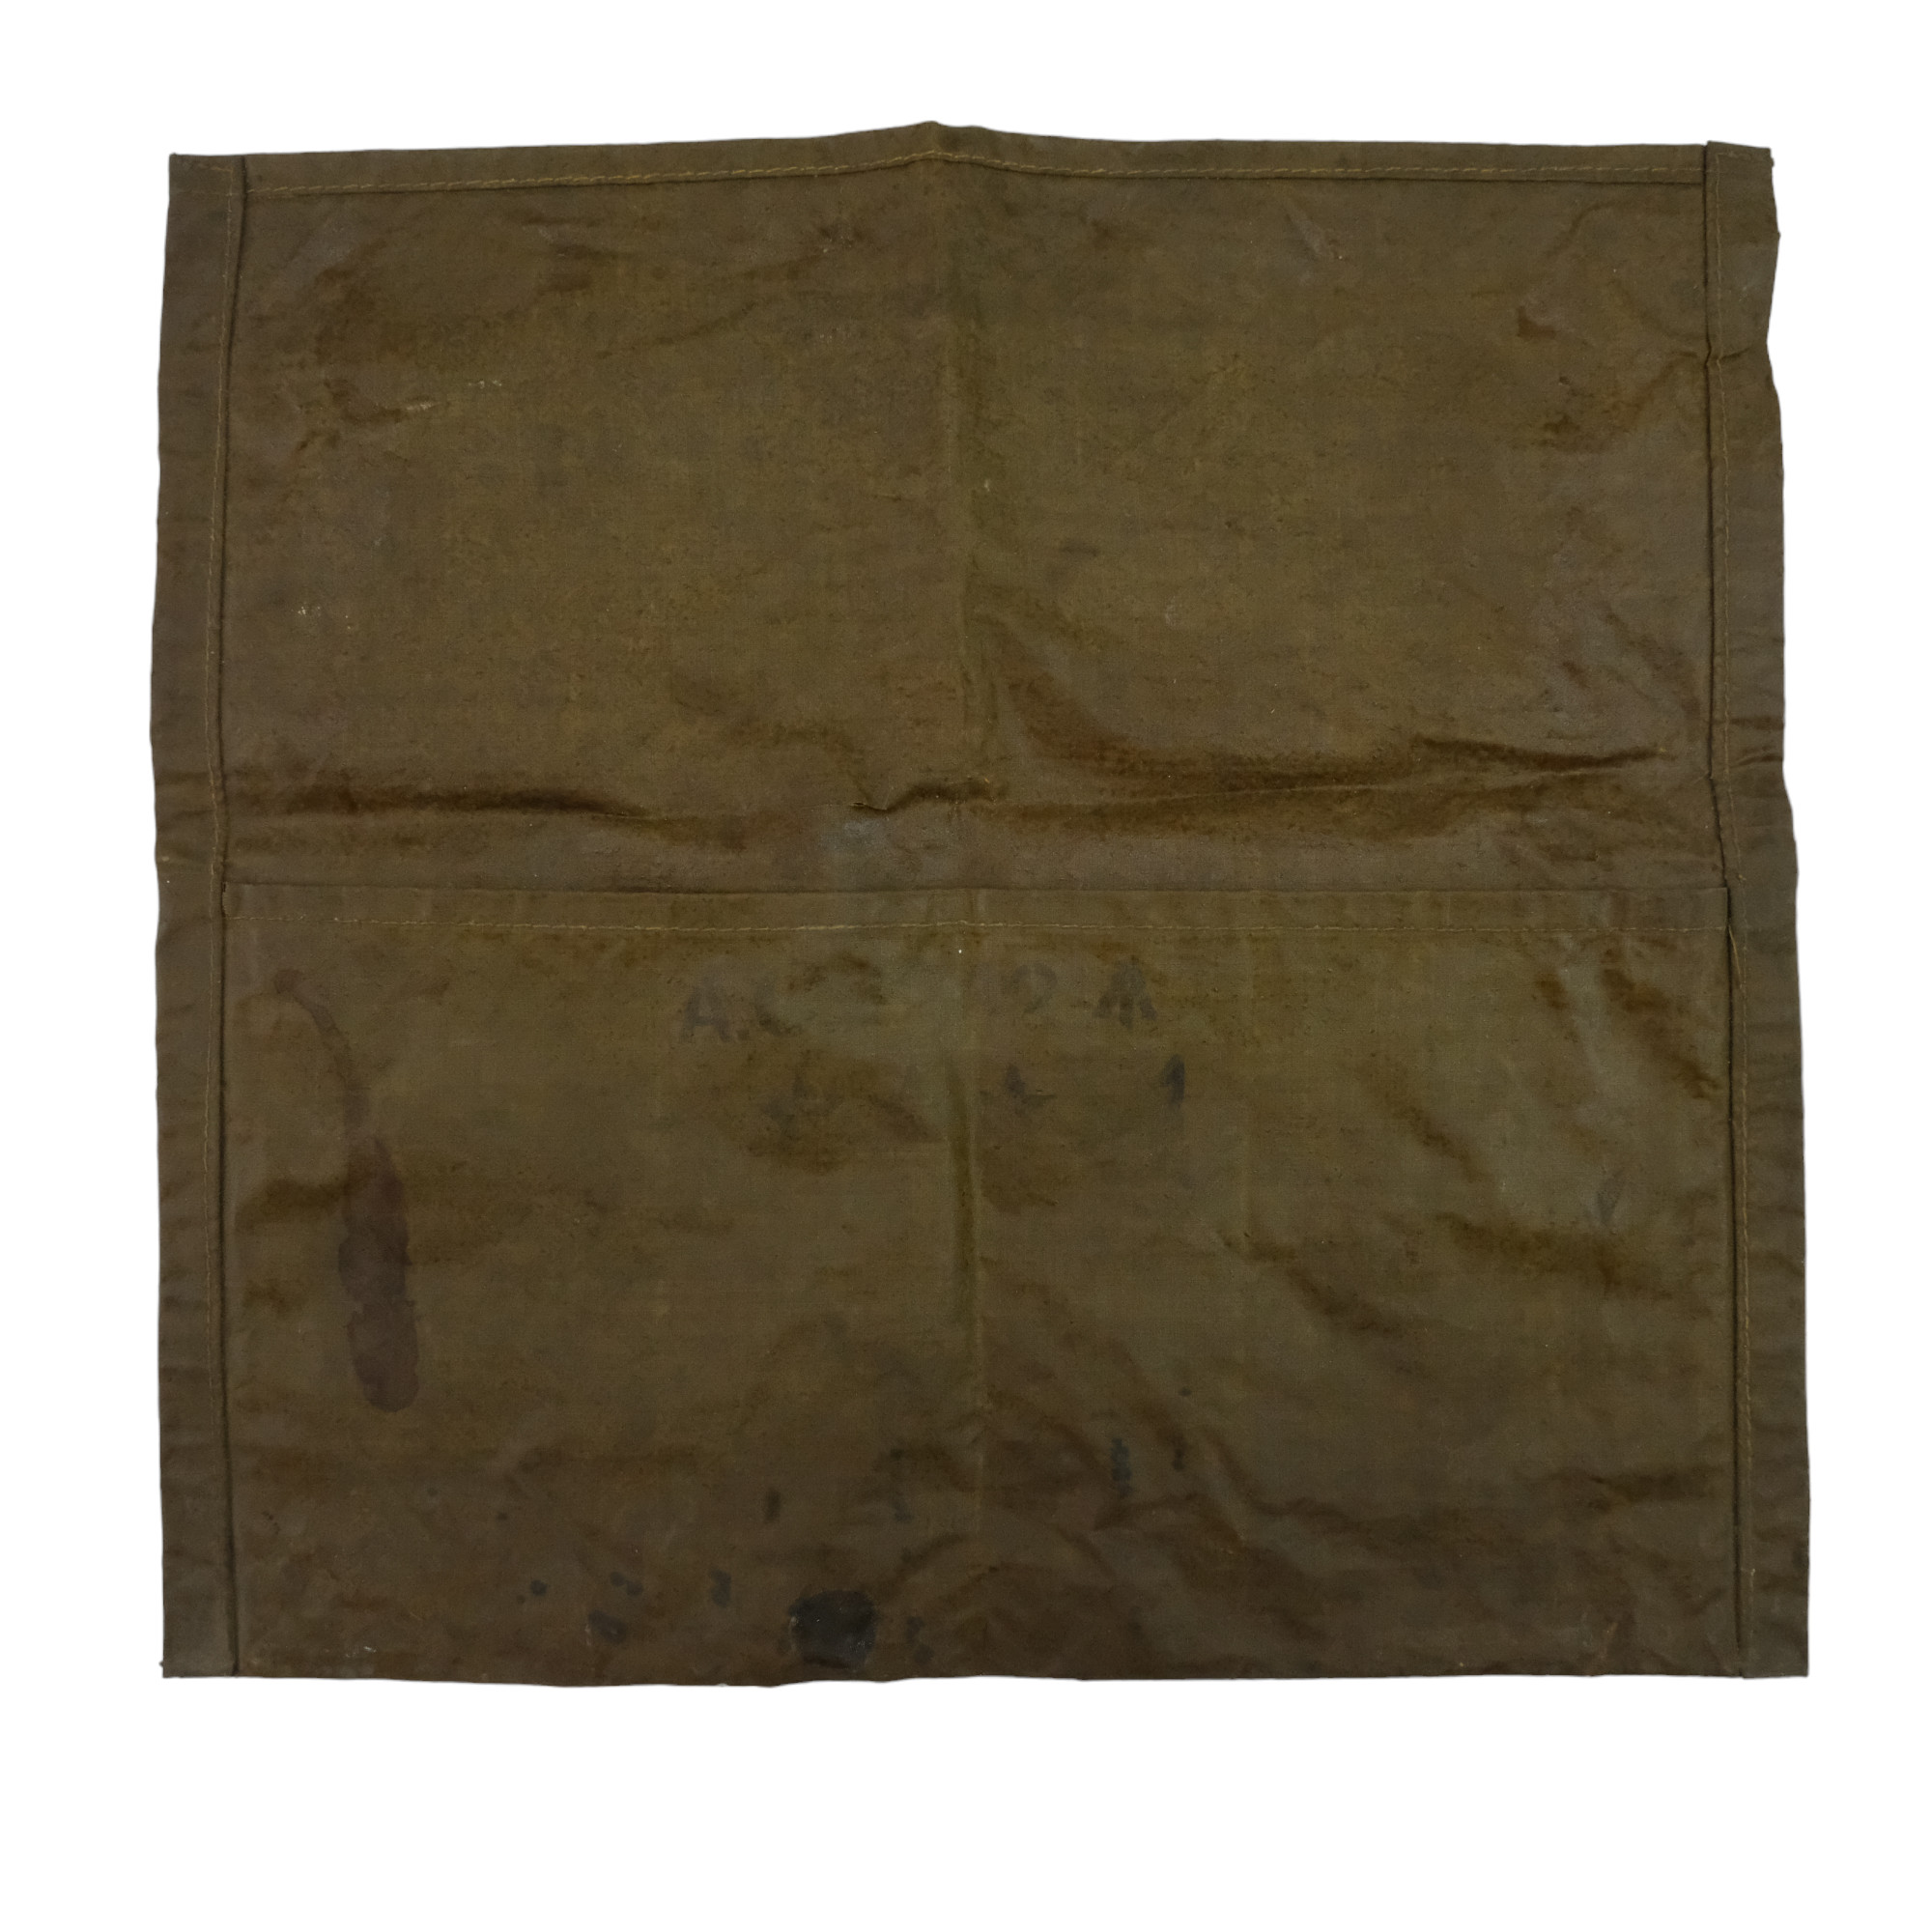 A Second World War British Army anti-gas wallet